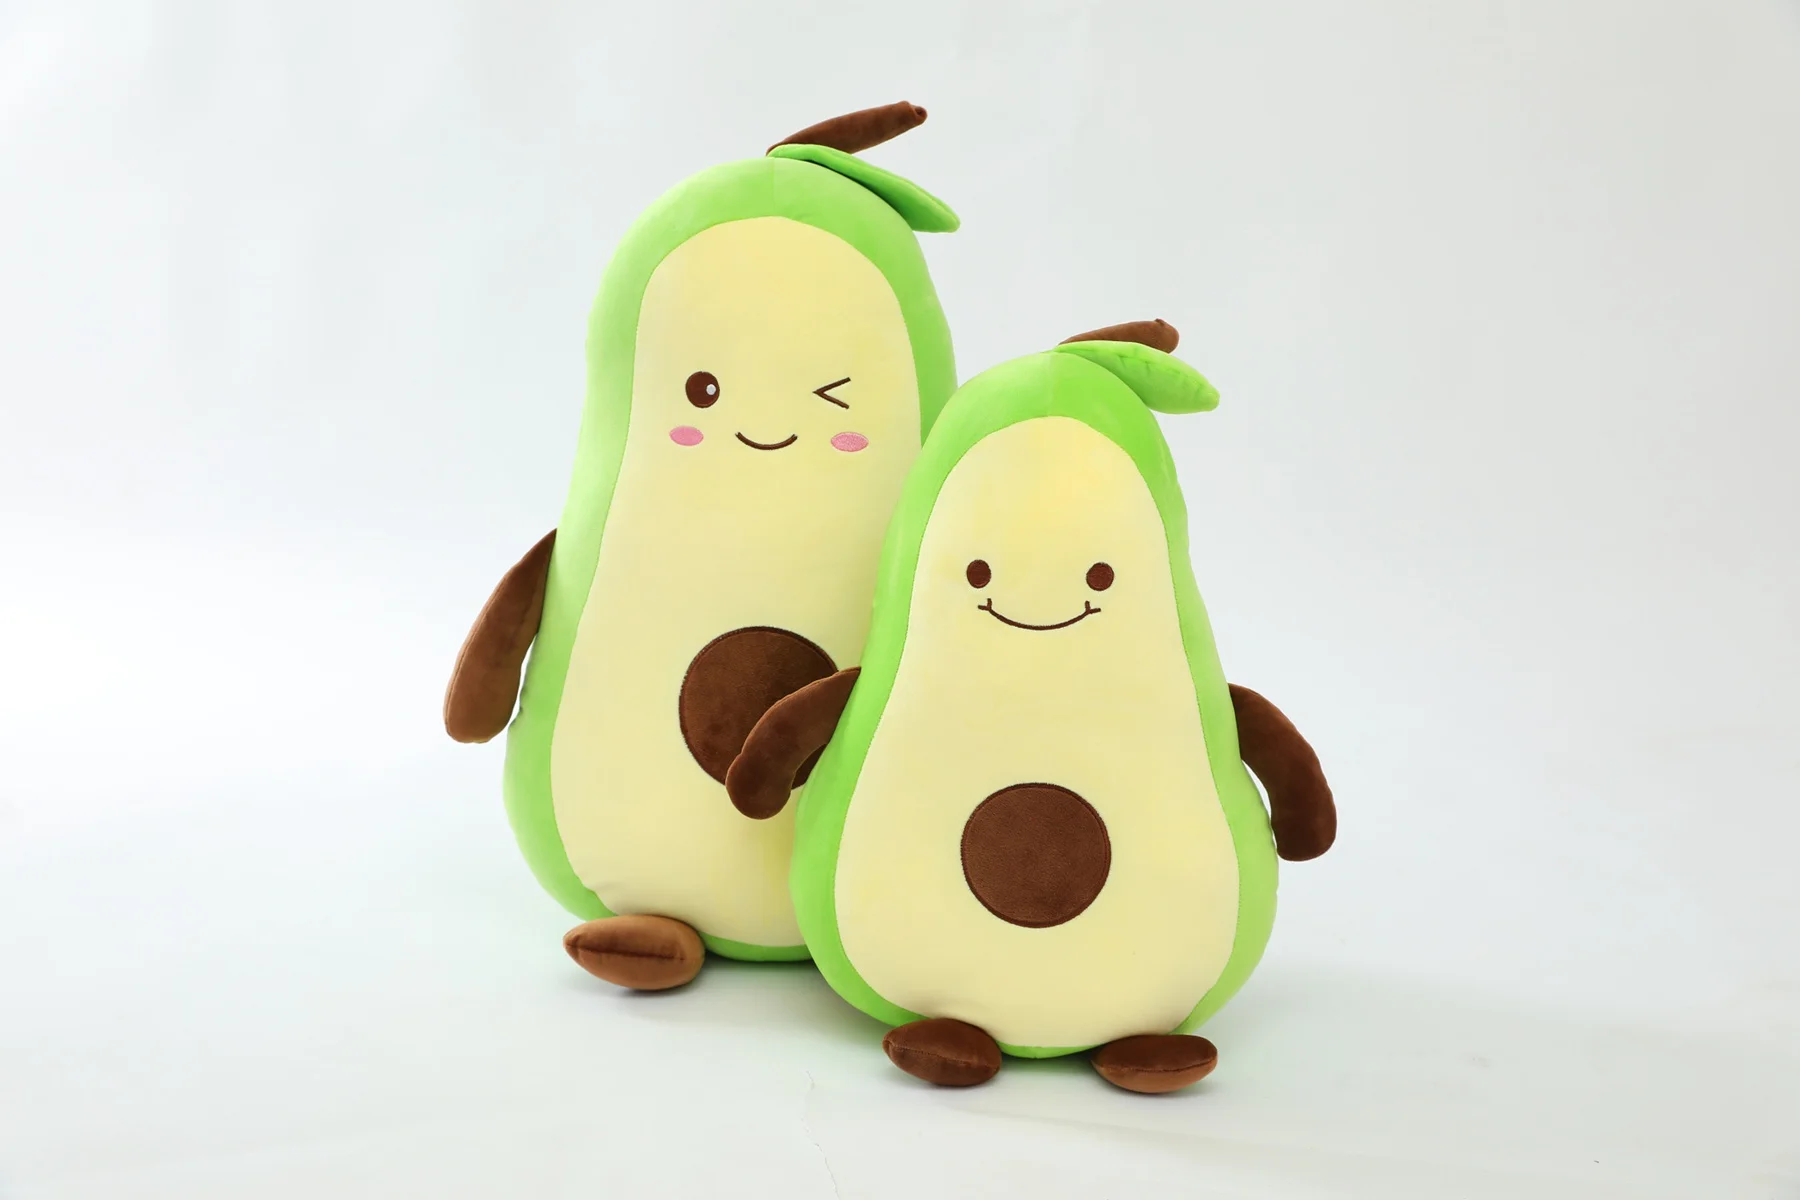 cute avocado plush